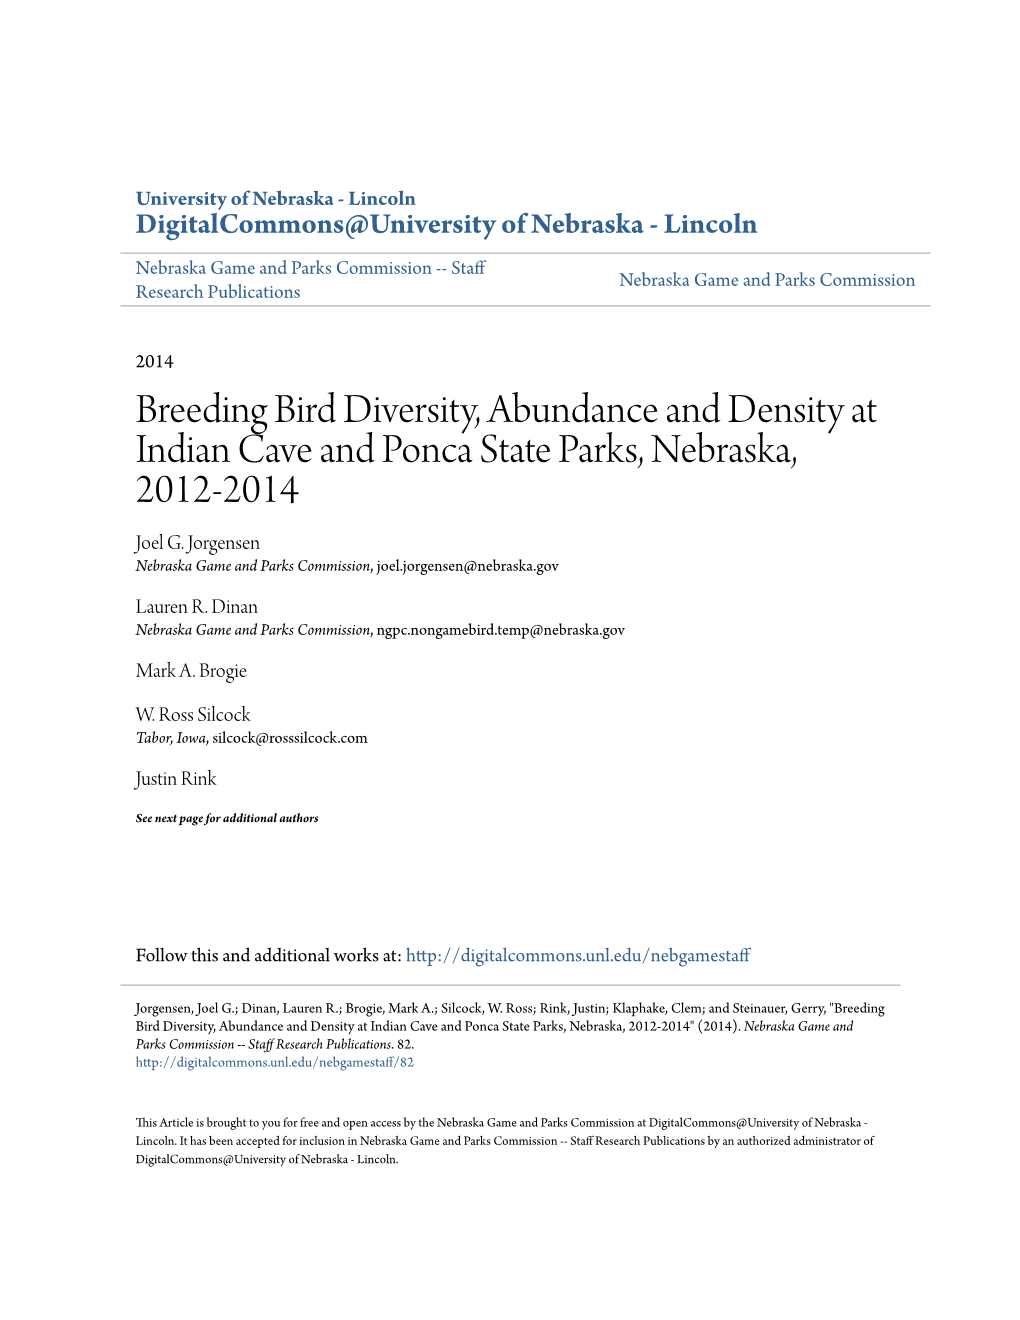 Breeding Bird Diversity, Abundance and Density at Indian Cave and Ponca State Parks, Nebraska, 2012-2014 Joel G